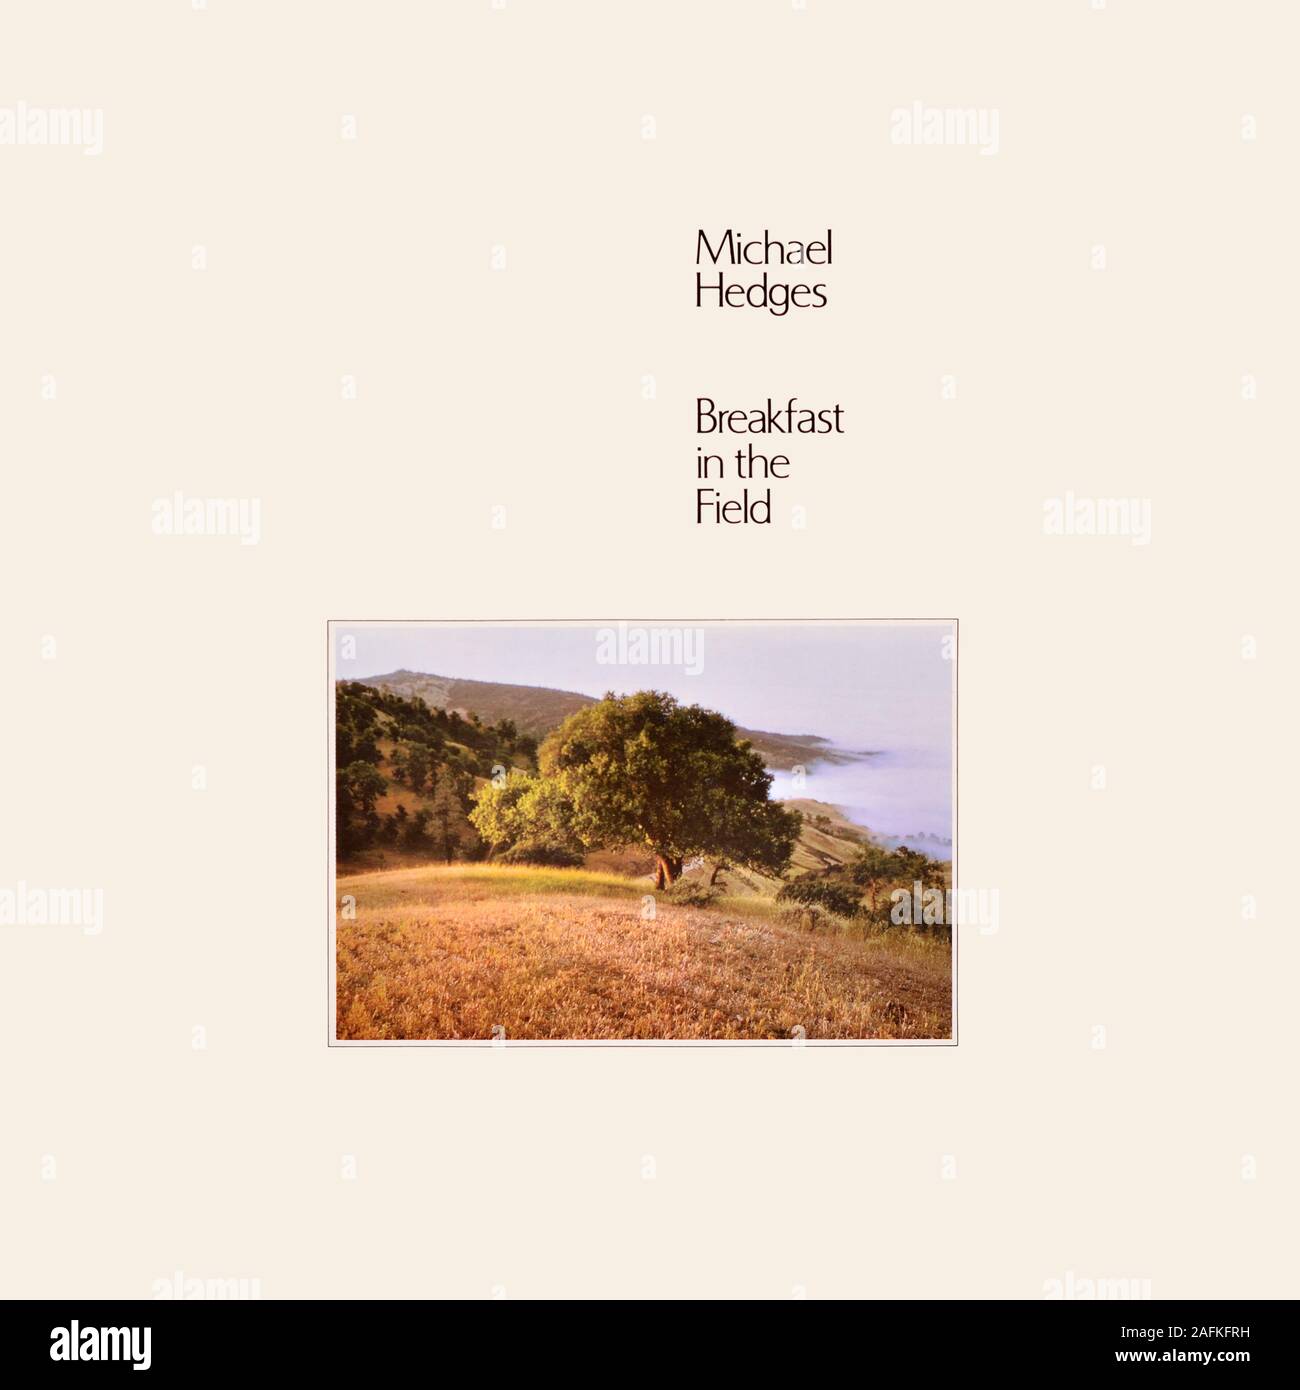 Michael Hedges - original vinyl album cover - Breakfast In The Field - 1981 Stock Photo